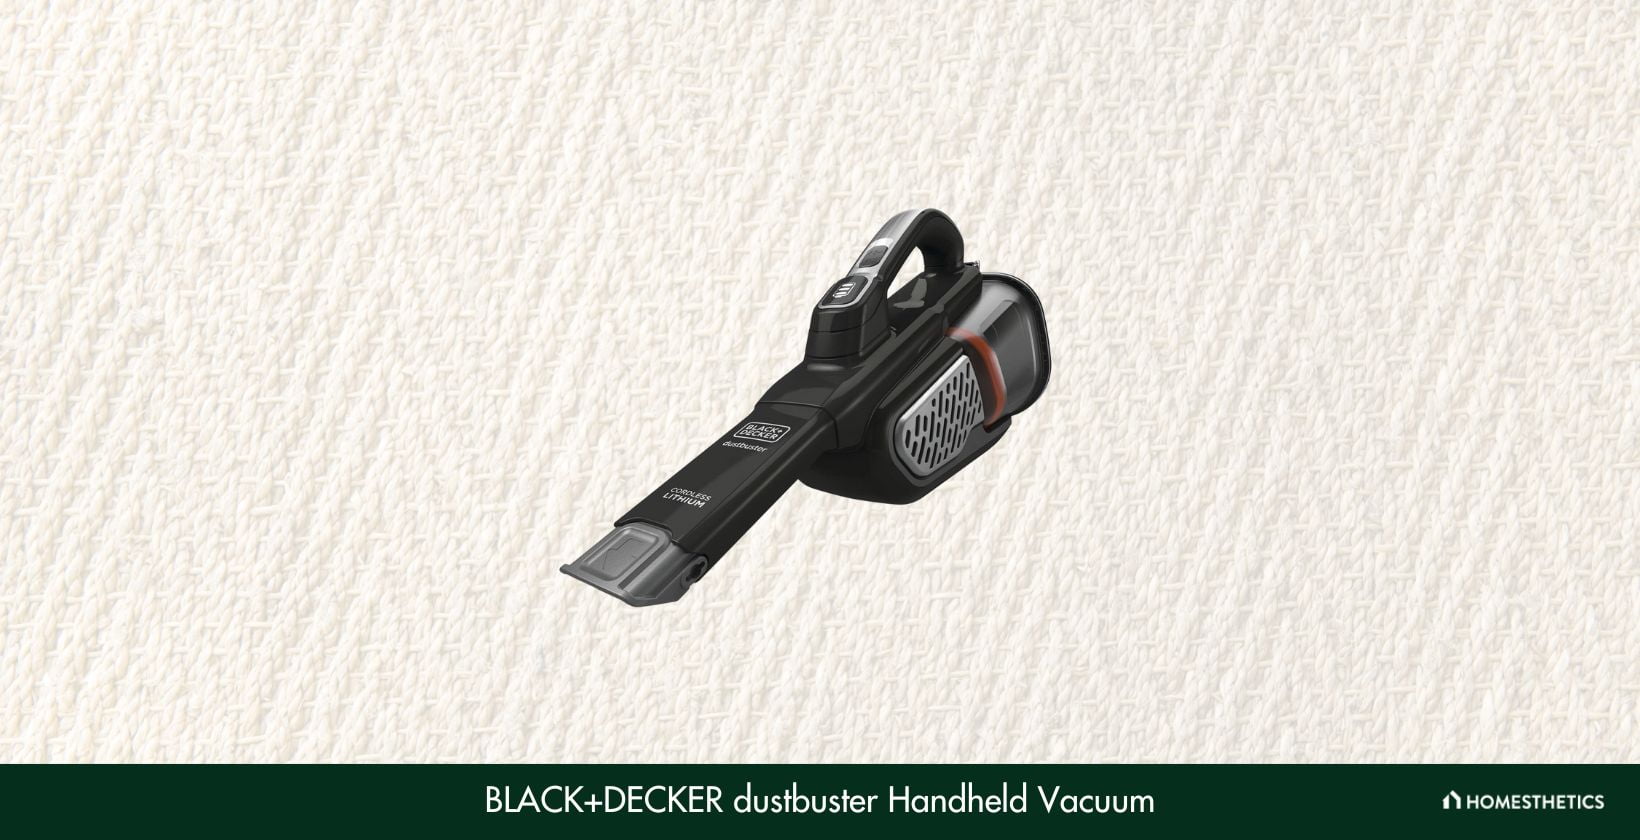 BLACKDECKER dustbuster Handheld Vacuum